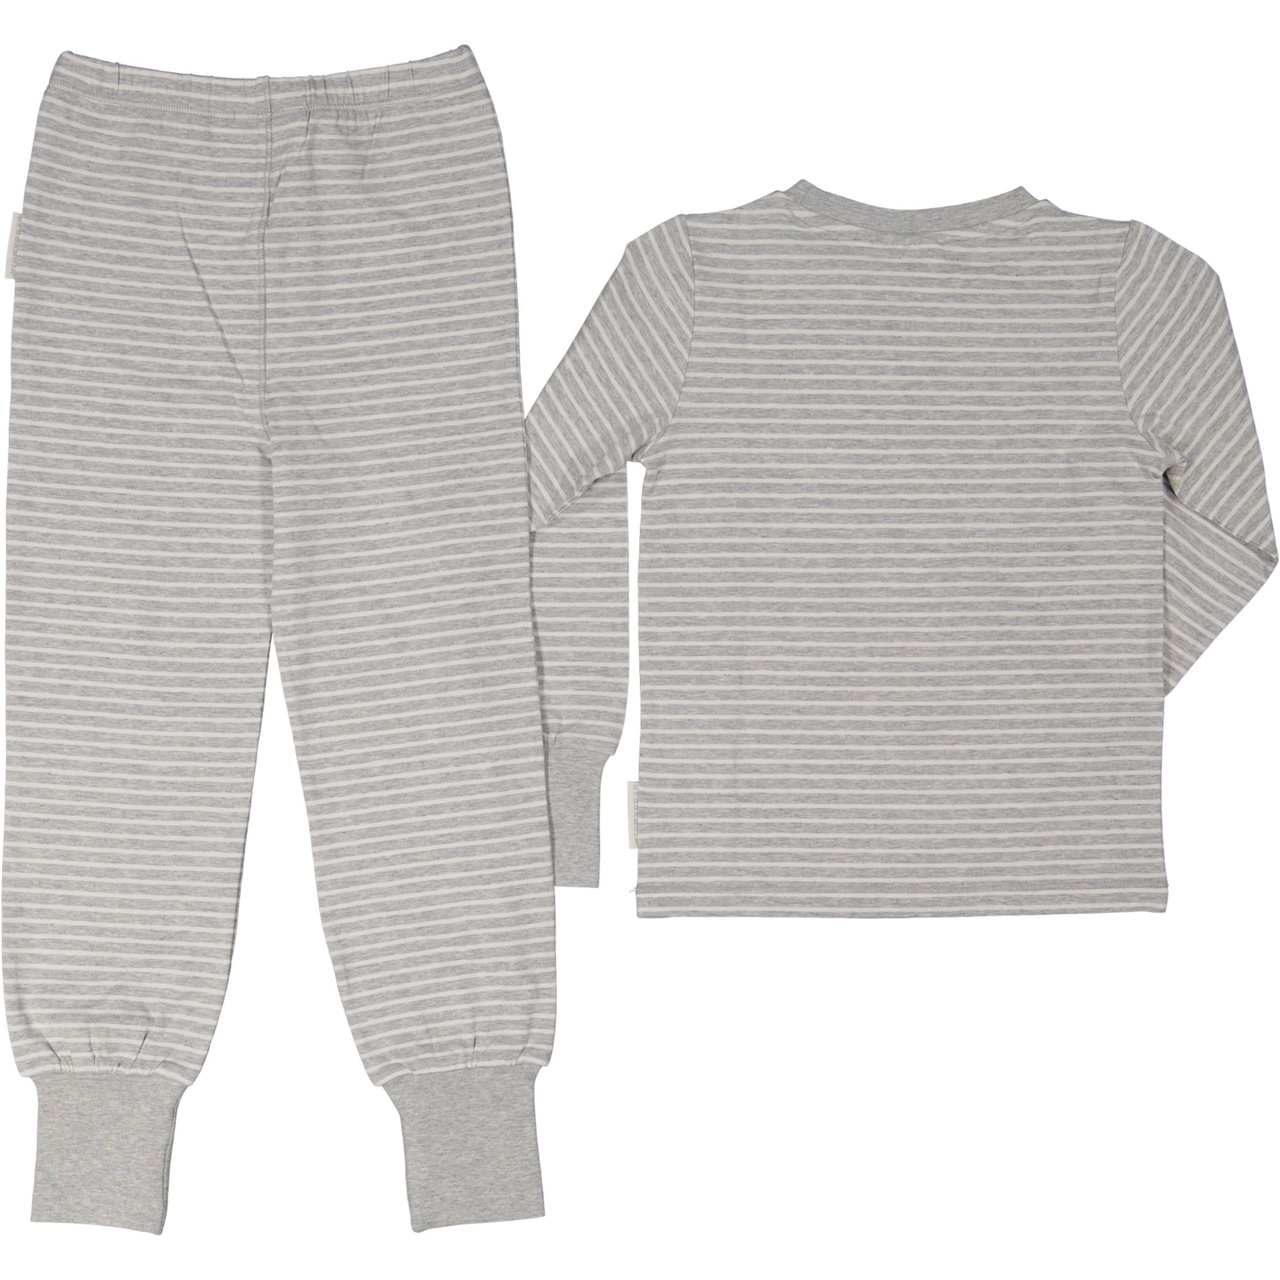 Two pcs pyjamas Classic Grey mel/white